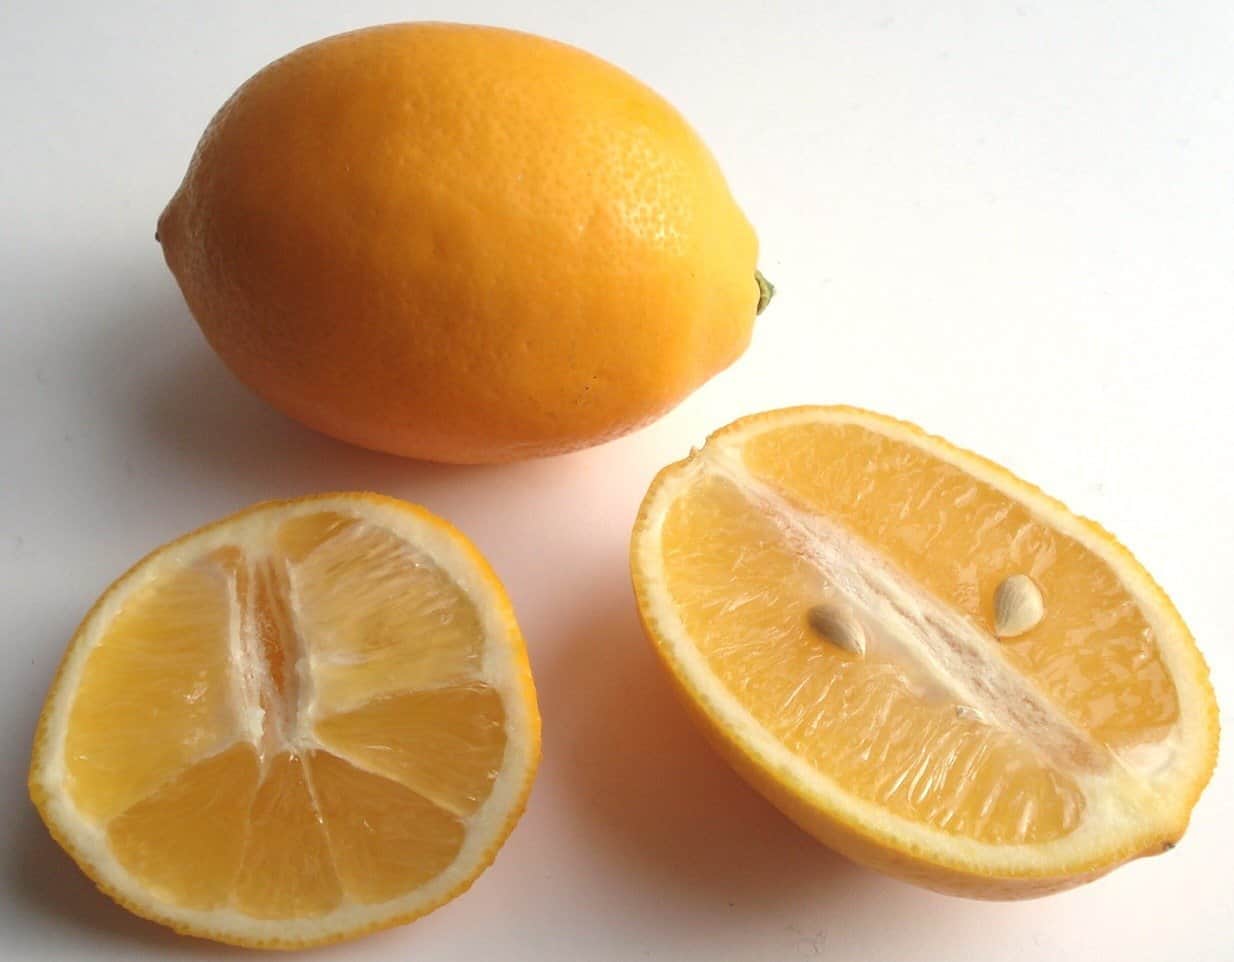 Citron Fruit Benefits Immunity, Heart Health & More - Dr. Axe